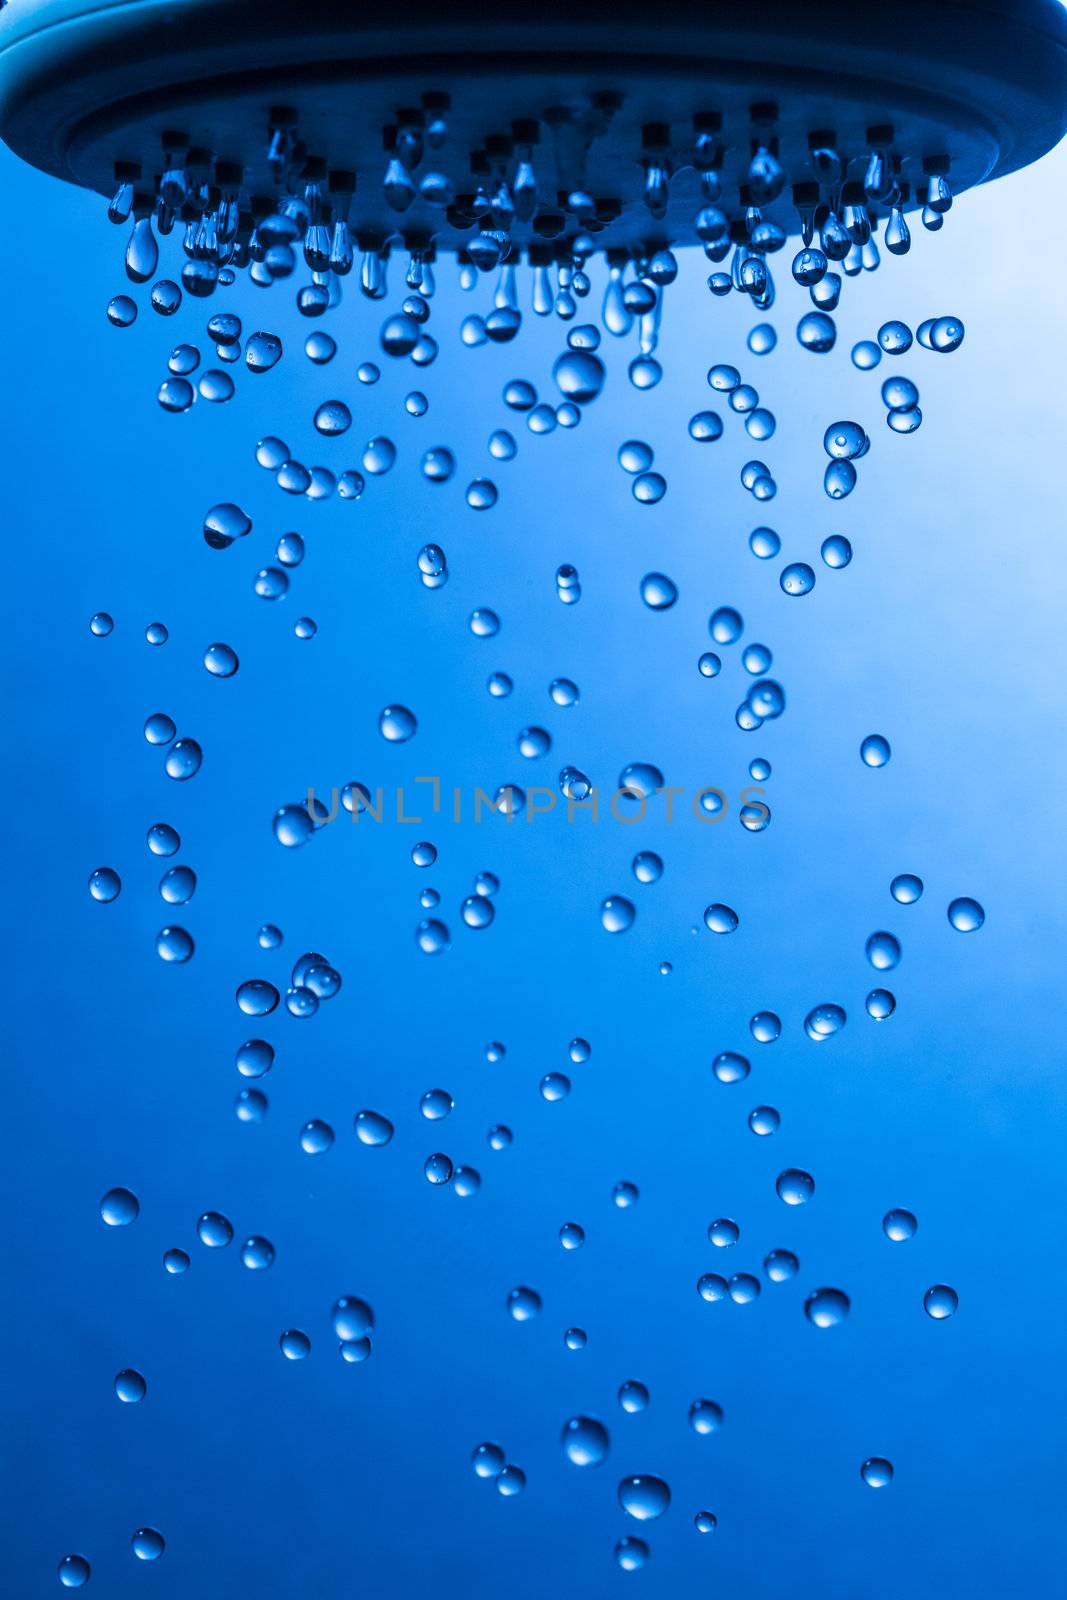 Shower Head with Droplet Water, Dark background